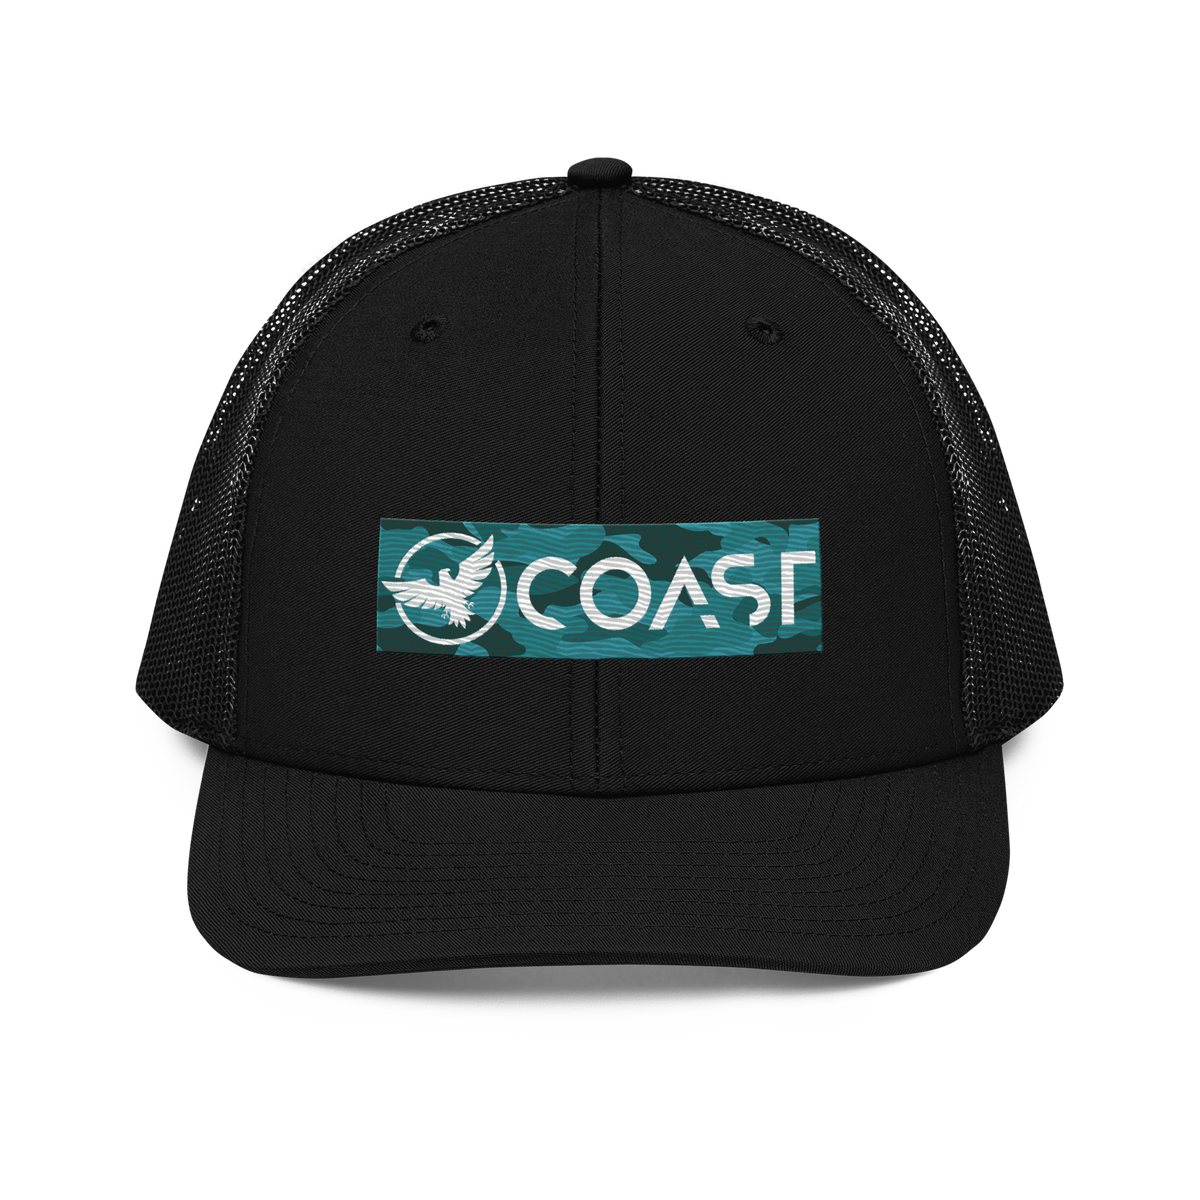 Find Your Coast Aqua Camo Trucker Hats Heather Grey/White